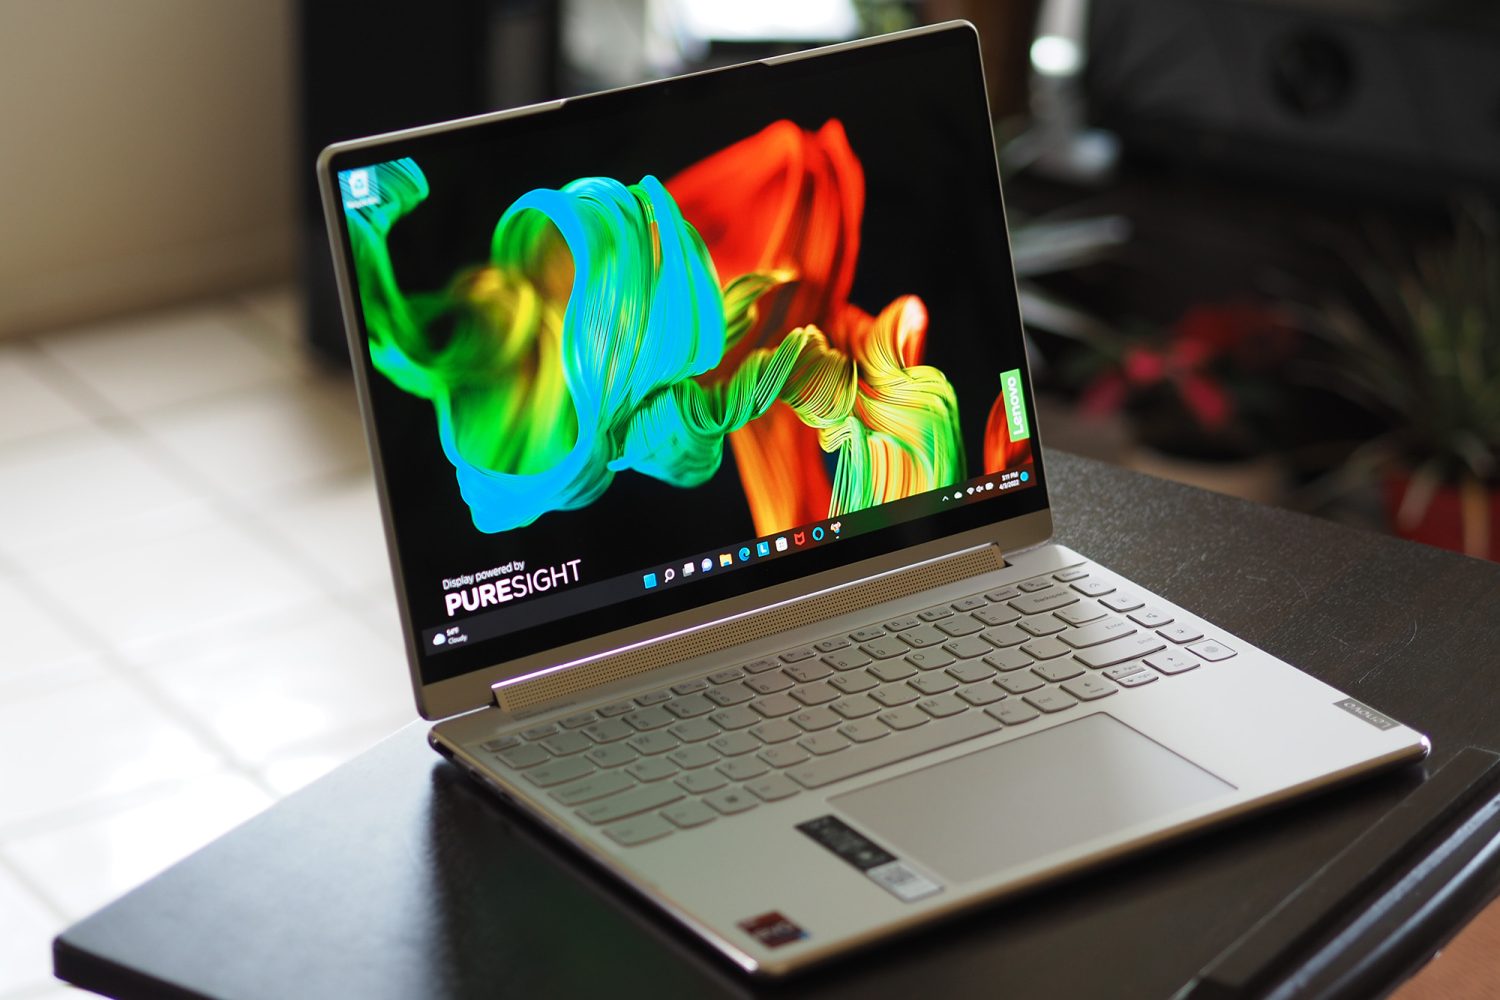 Best 14-inch Laptops of 2021! 